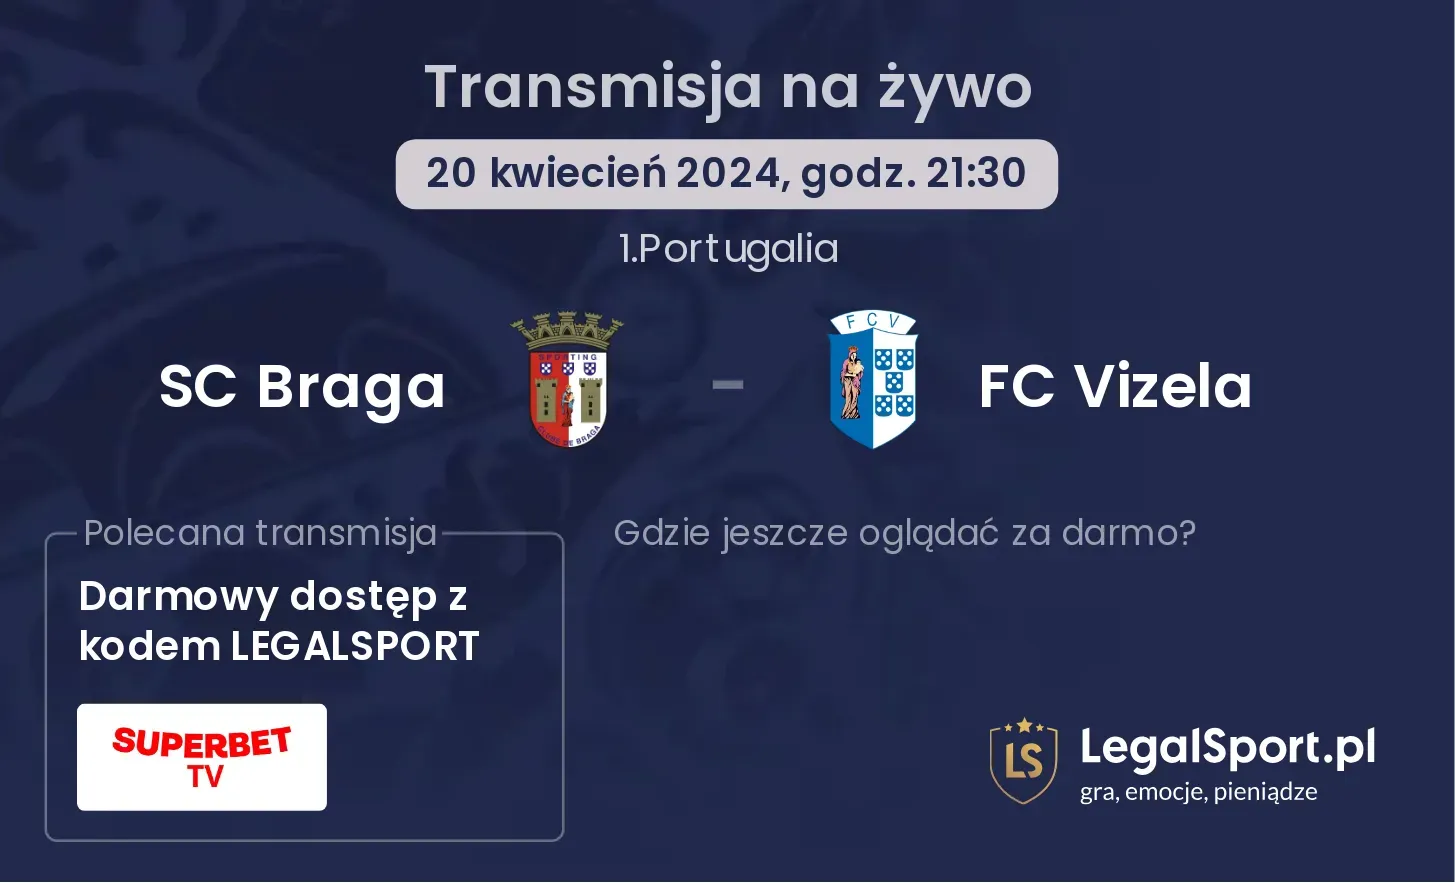 SC Braga - FC Vizela transmisja na żywo